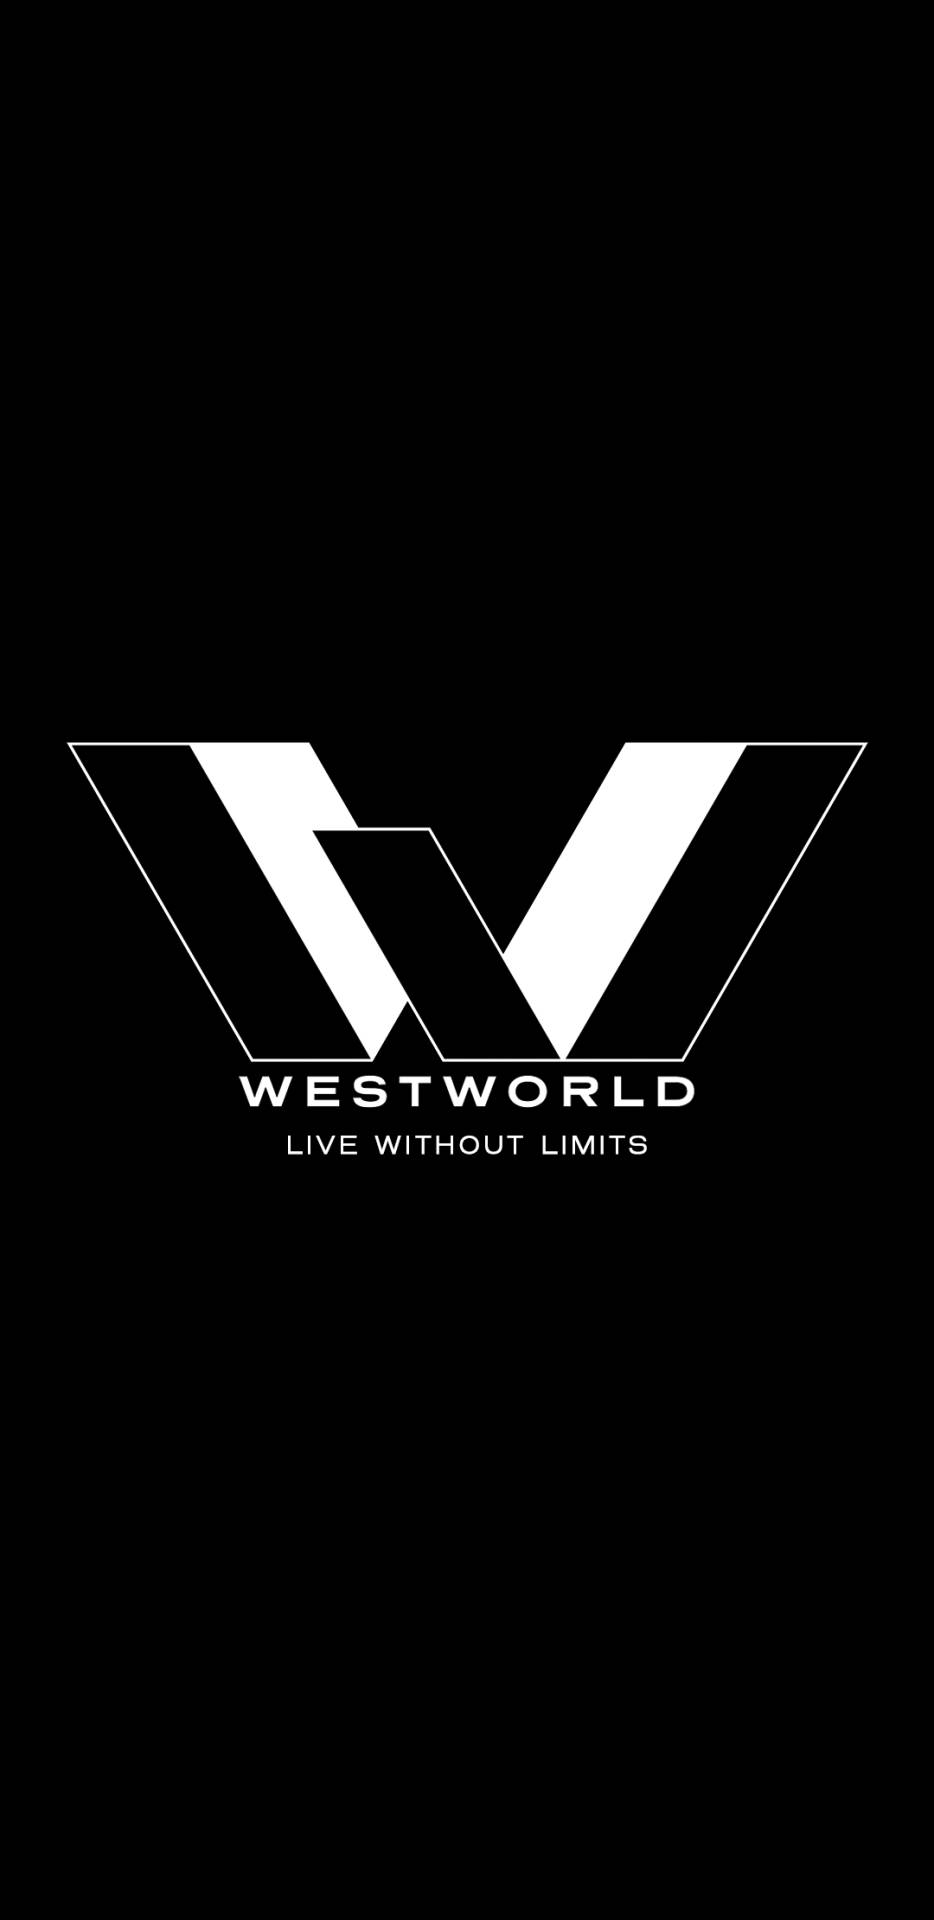 Westworld Live Without Limits Logo Background